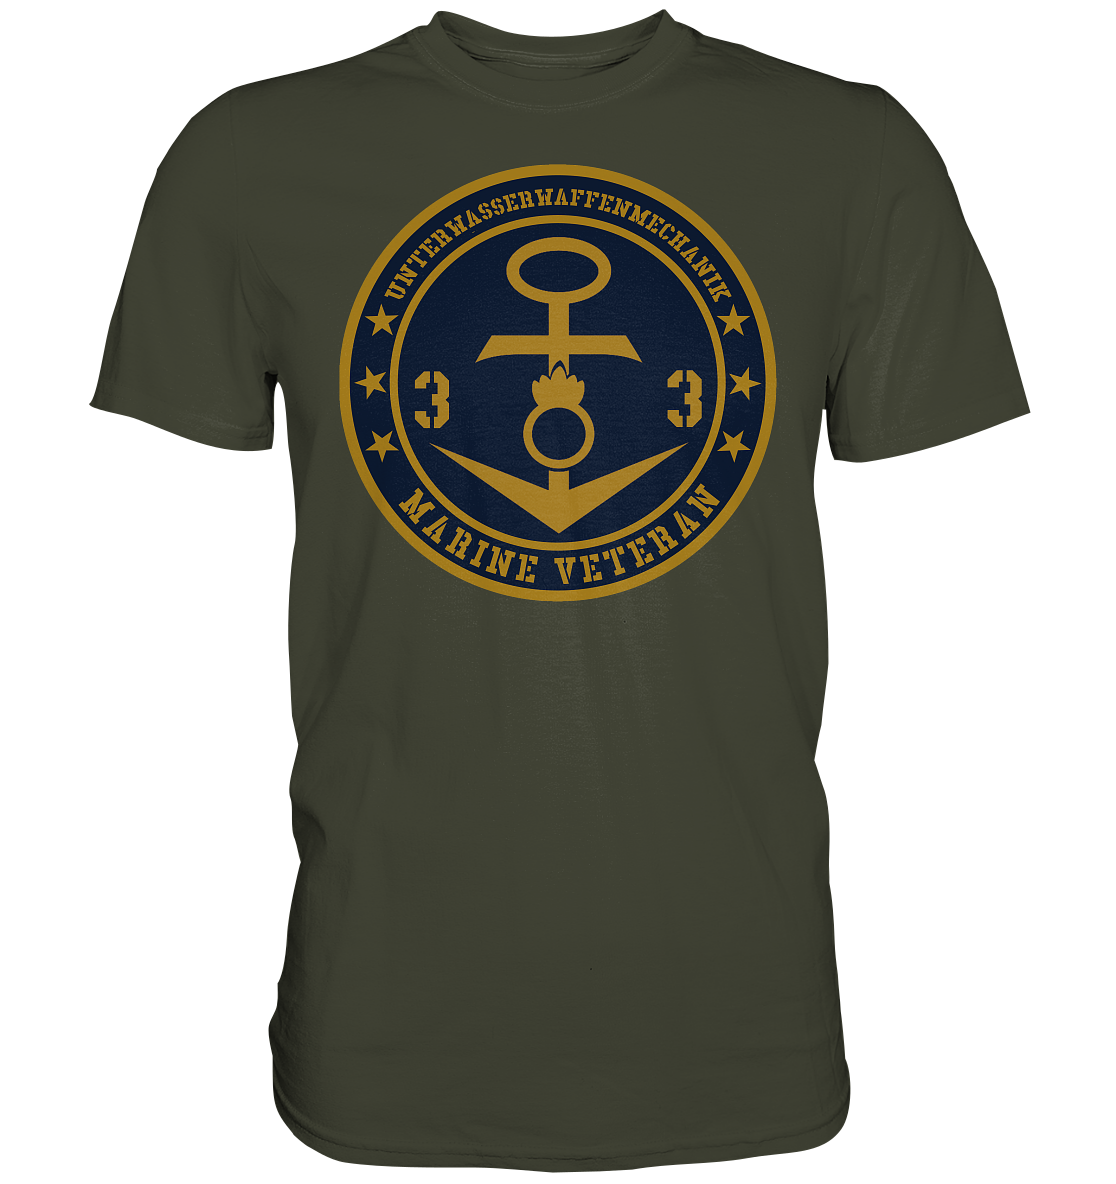 Marine Veteran 33er UNTERWASSERWAFFENMECHANIK - Premium Shirt